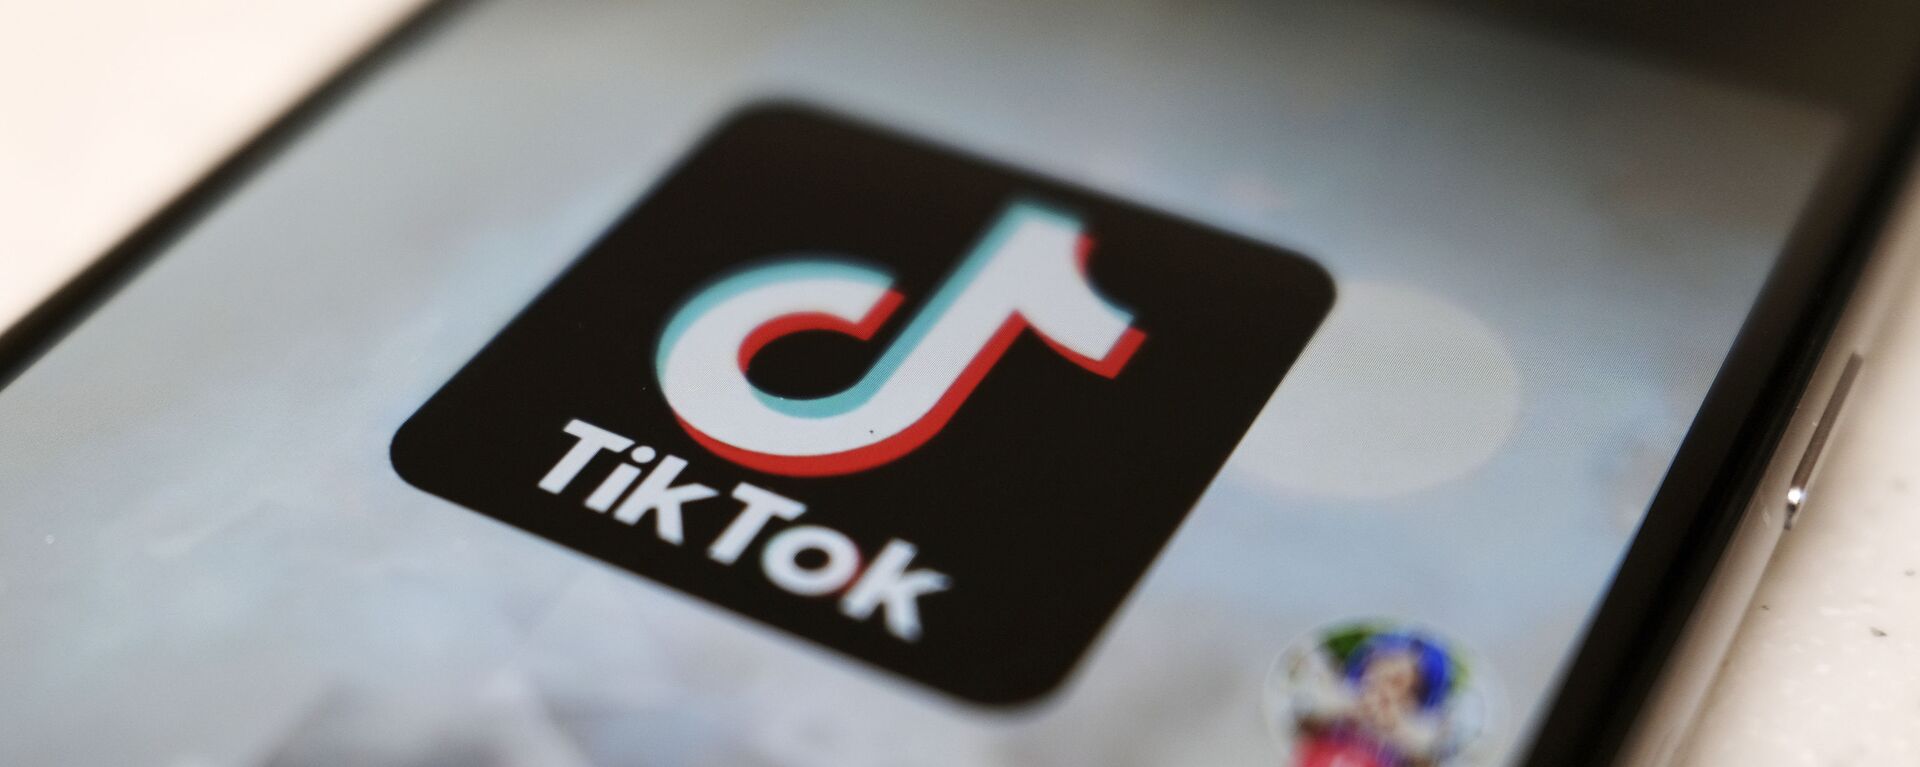 A logo of a smartphone app TikTok is seen on a user post on a smartphone screen Monday, Sept. 28, 2020, in Tokyo - Sputnik International, 1920, 26.02.2021